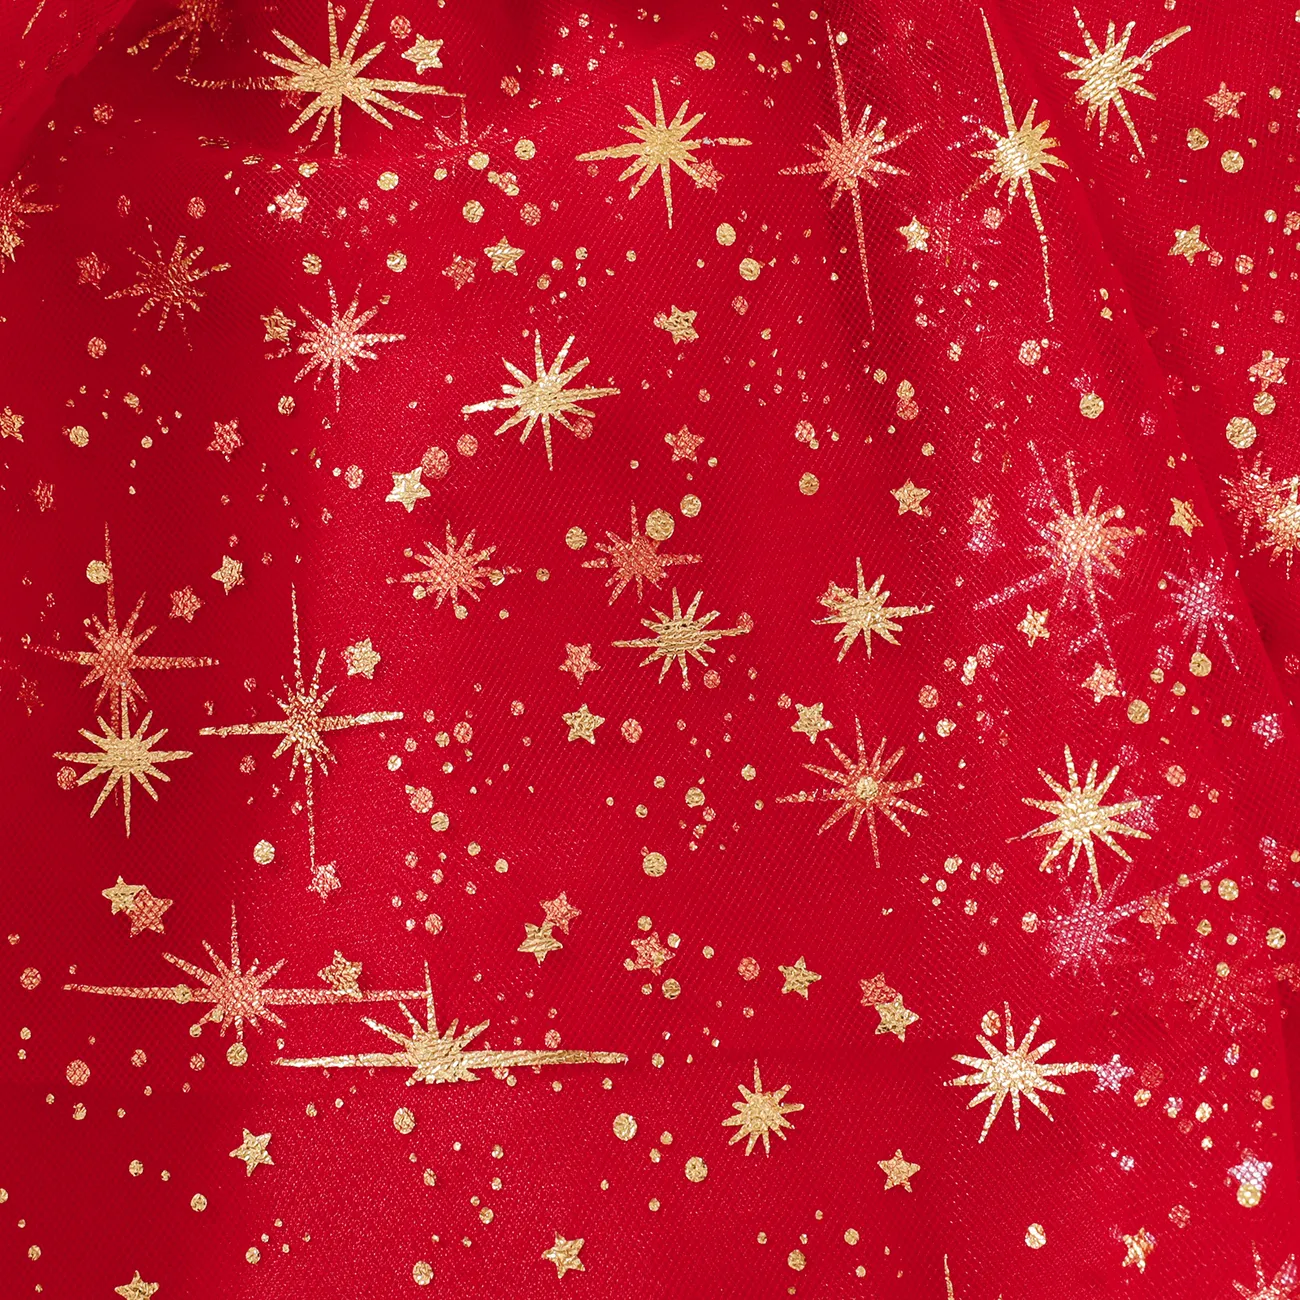 Christmas 3pcs Baby Girl Reindeer & Letter Print Ruffle Long-sleeve Romper and Glitter Mesh Skirt with Headband Set REDWHITE big image 1